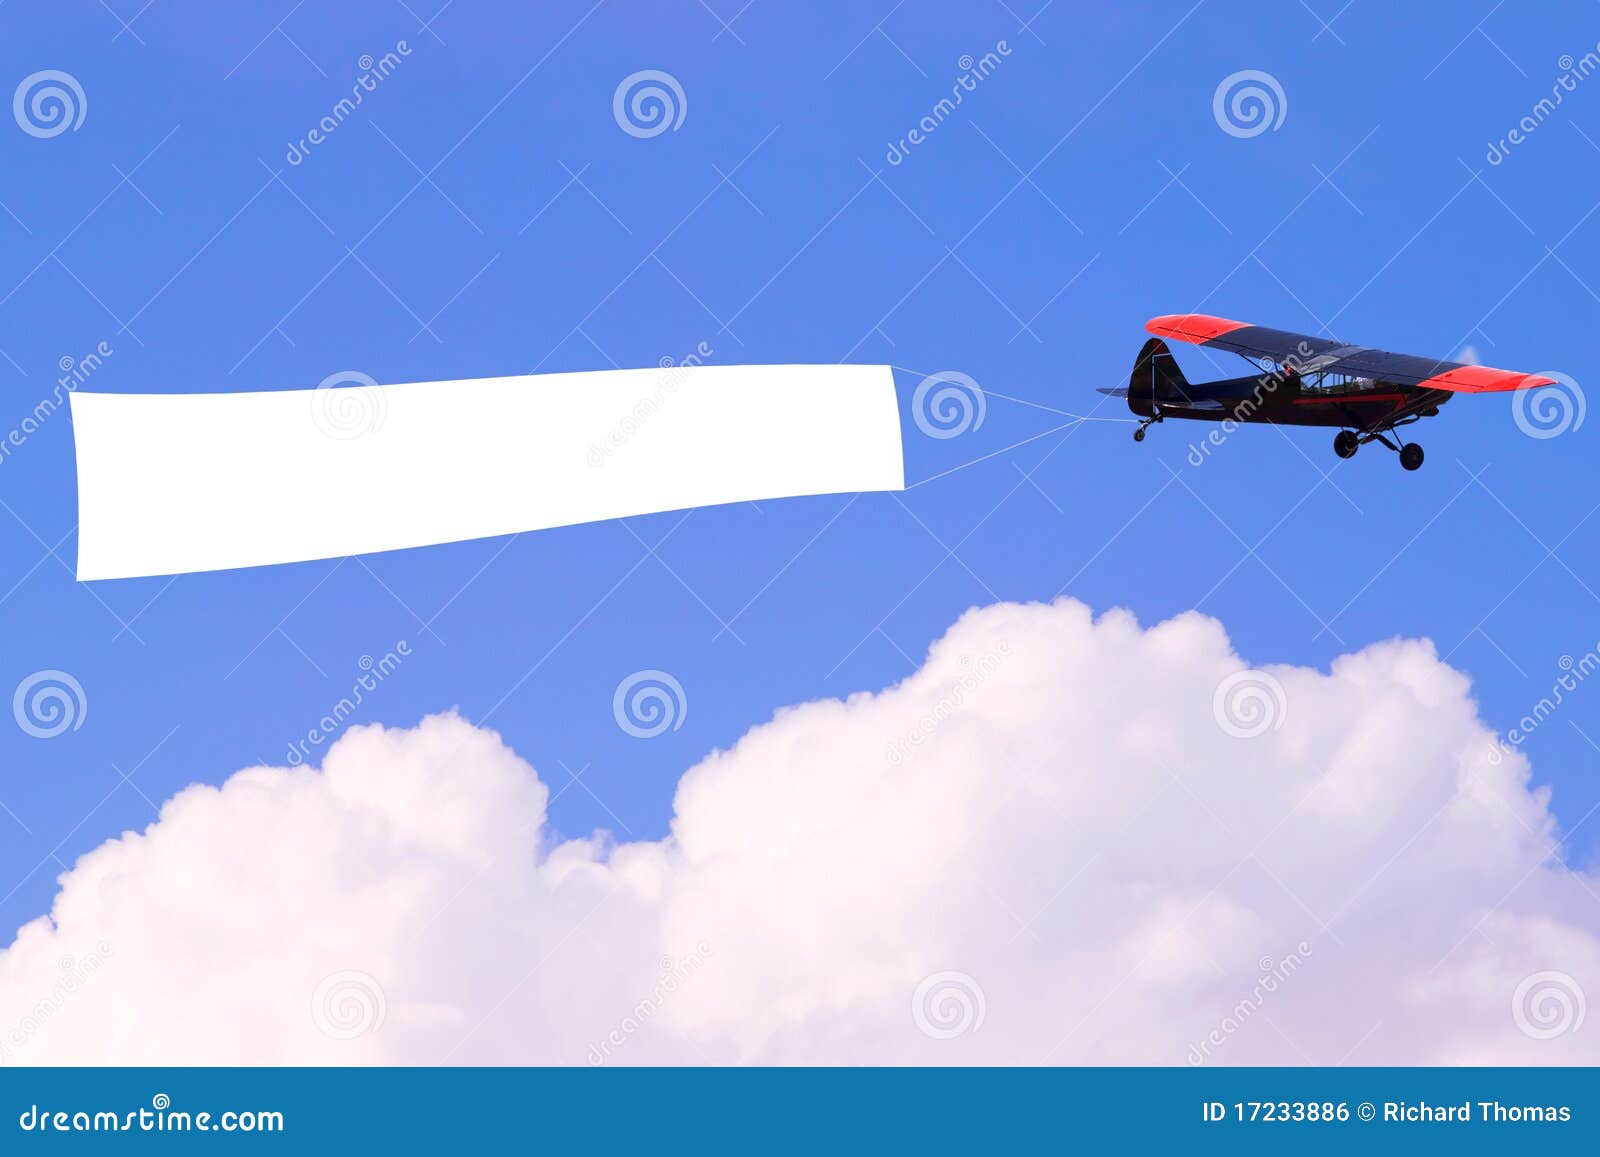 airplane flying blank banner